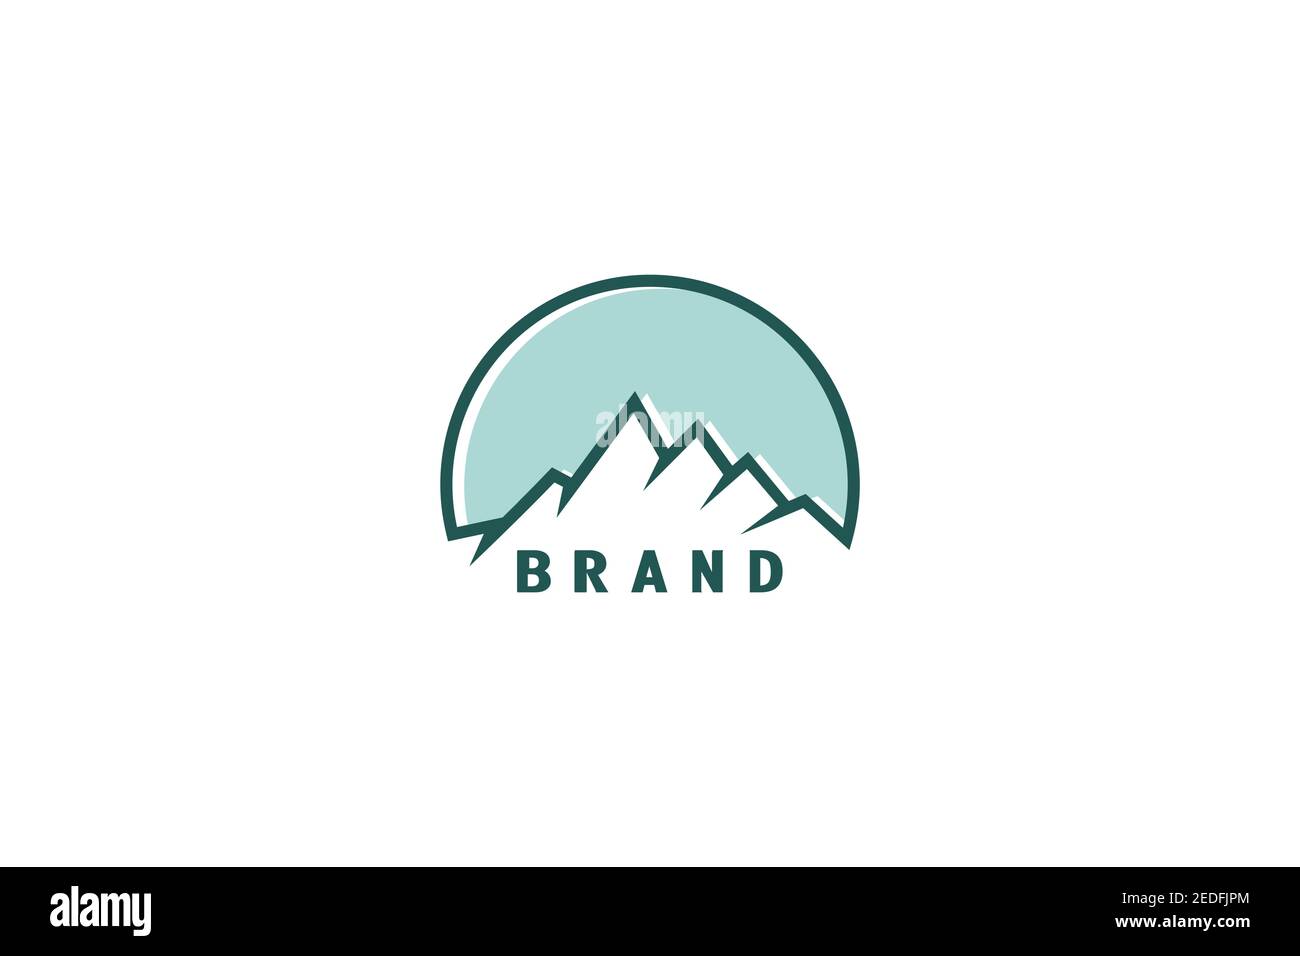 Mountain logo design, simple and minimalist brand identity. Stock Vector